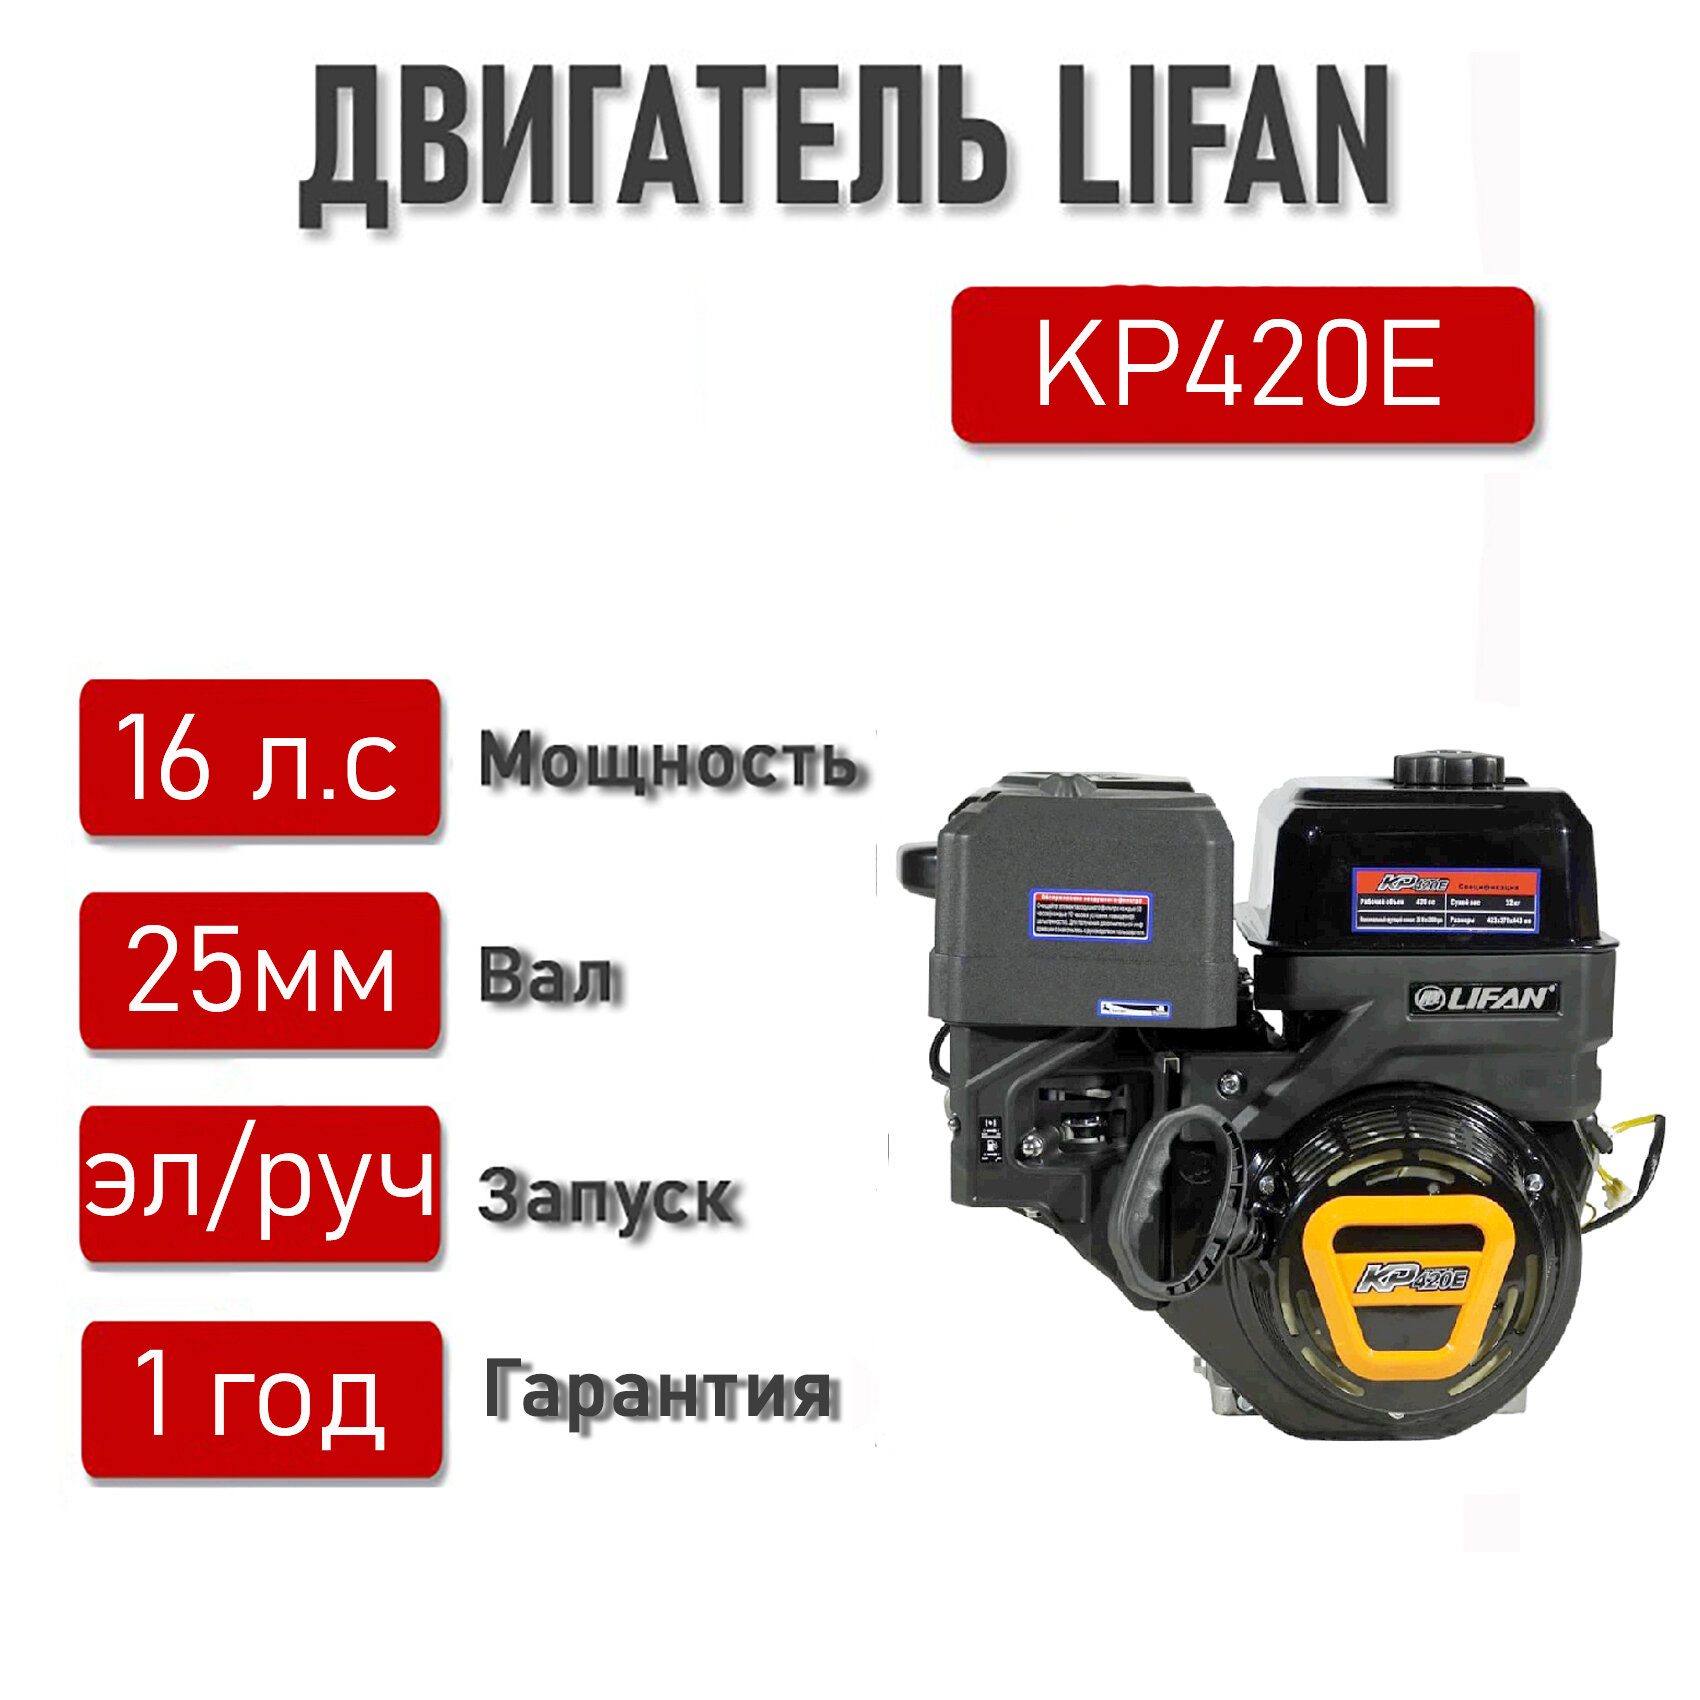 Двигатель LIFAN 160 л. с. KP420E (вал 25 мм) + электростартер